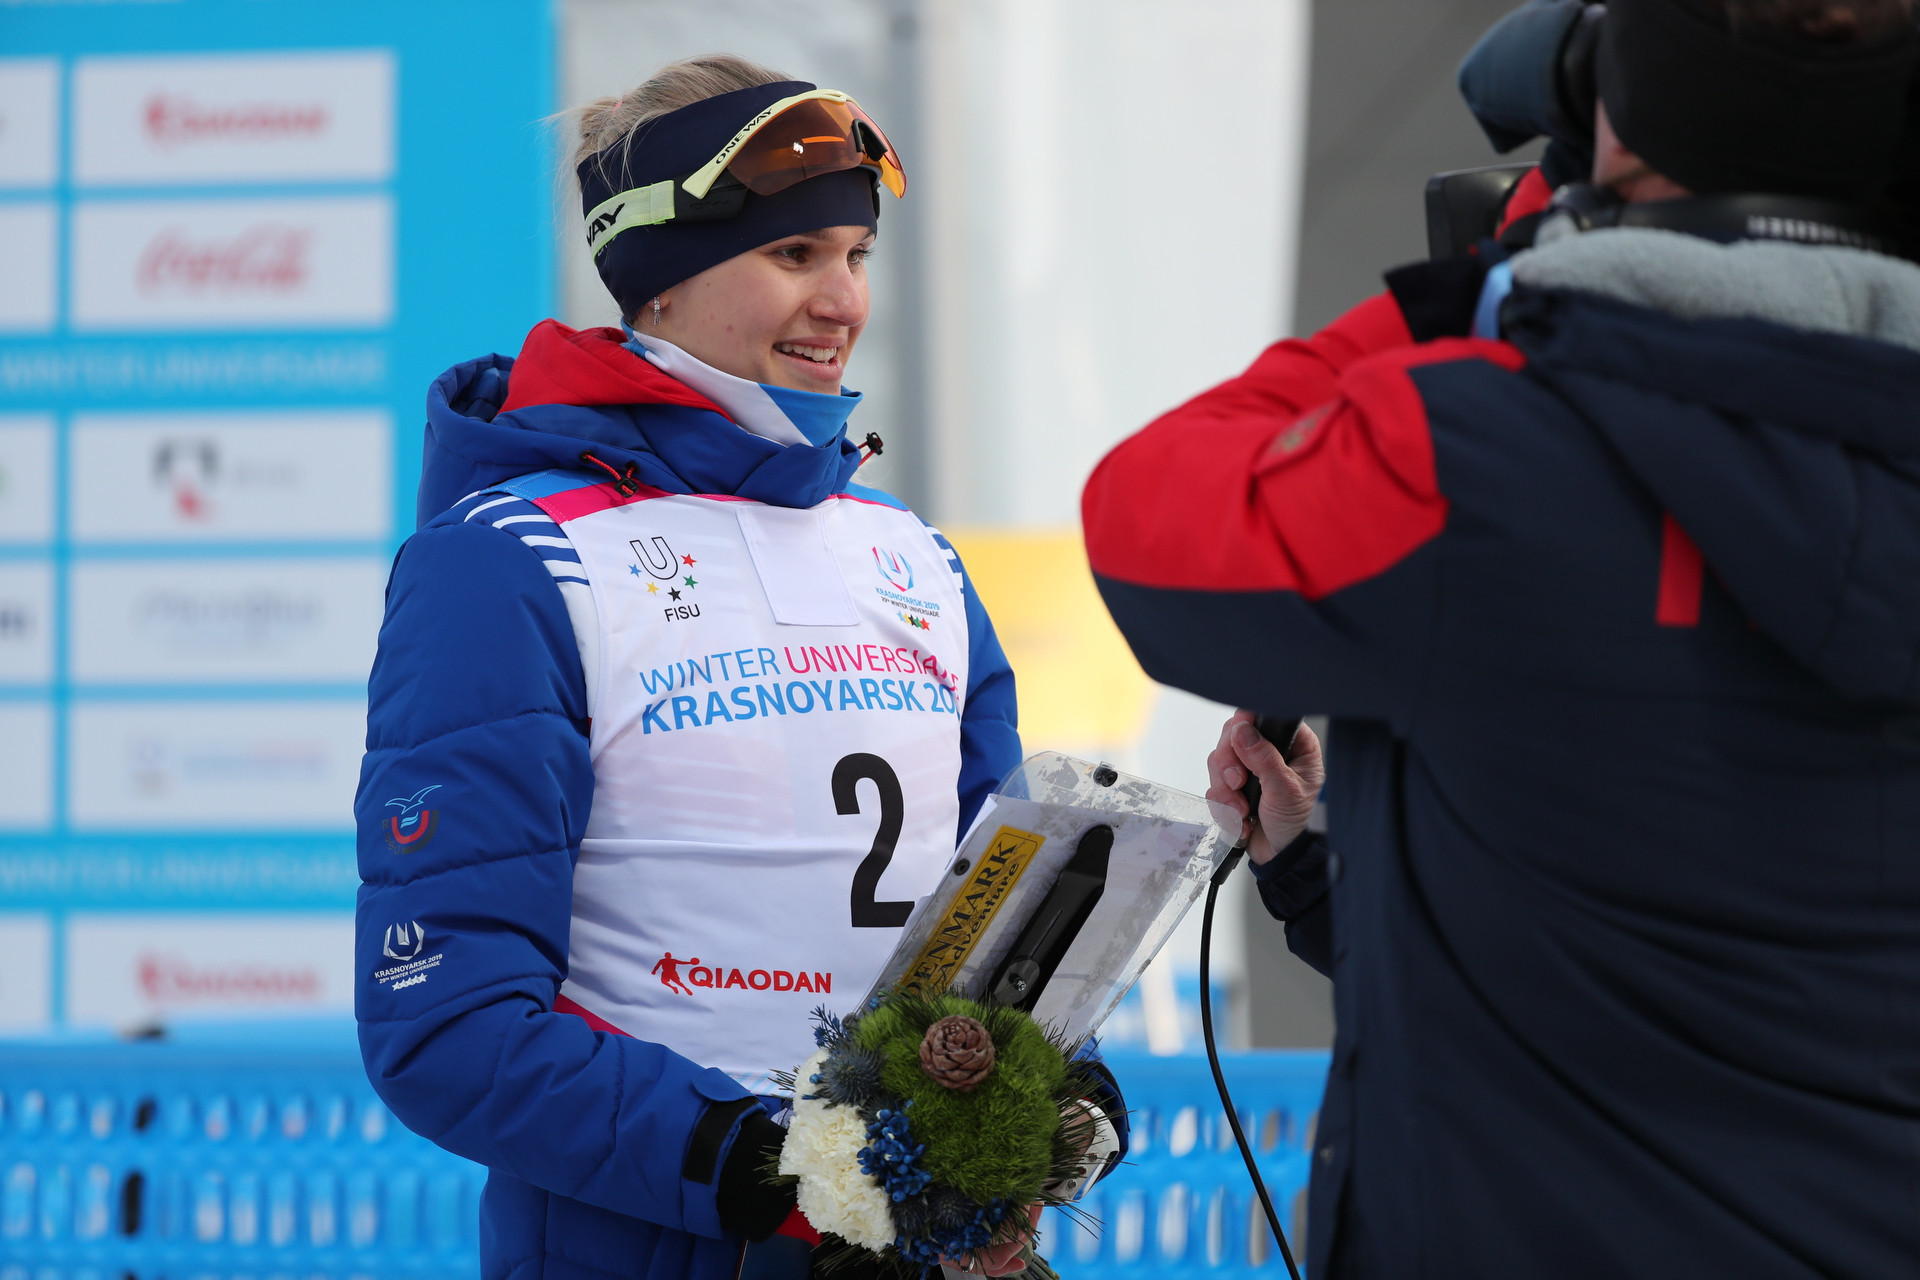 Nineteen-year-old Marina Viatkina, who comes from Siberia, comfortably won the women's pursuit ski orienteering event ©Krasnoyarsk 2019